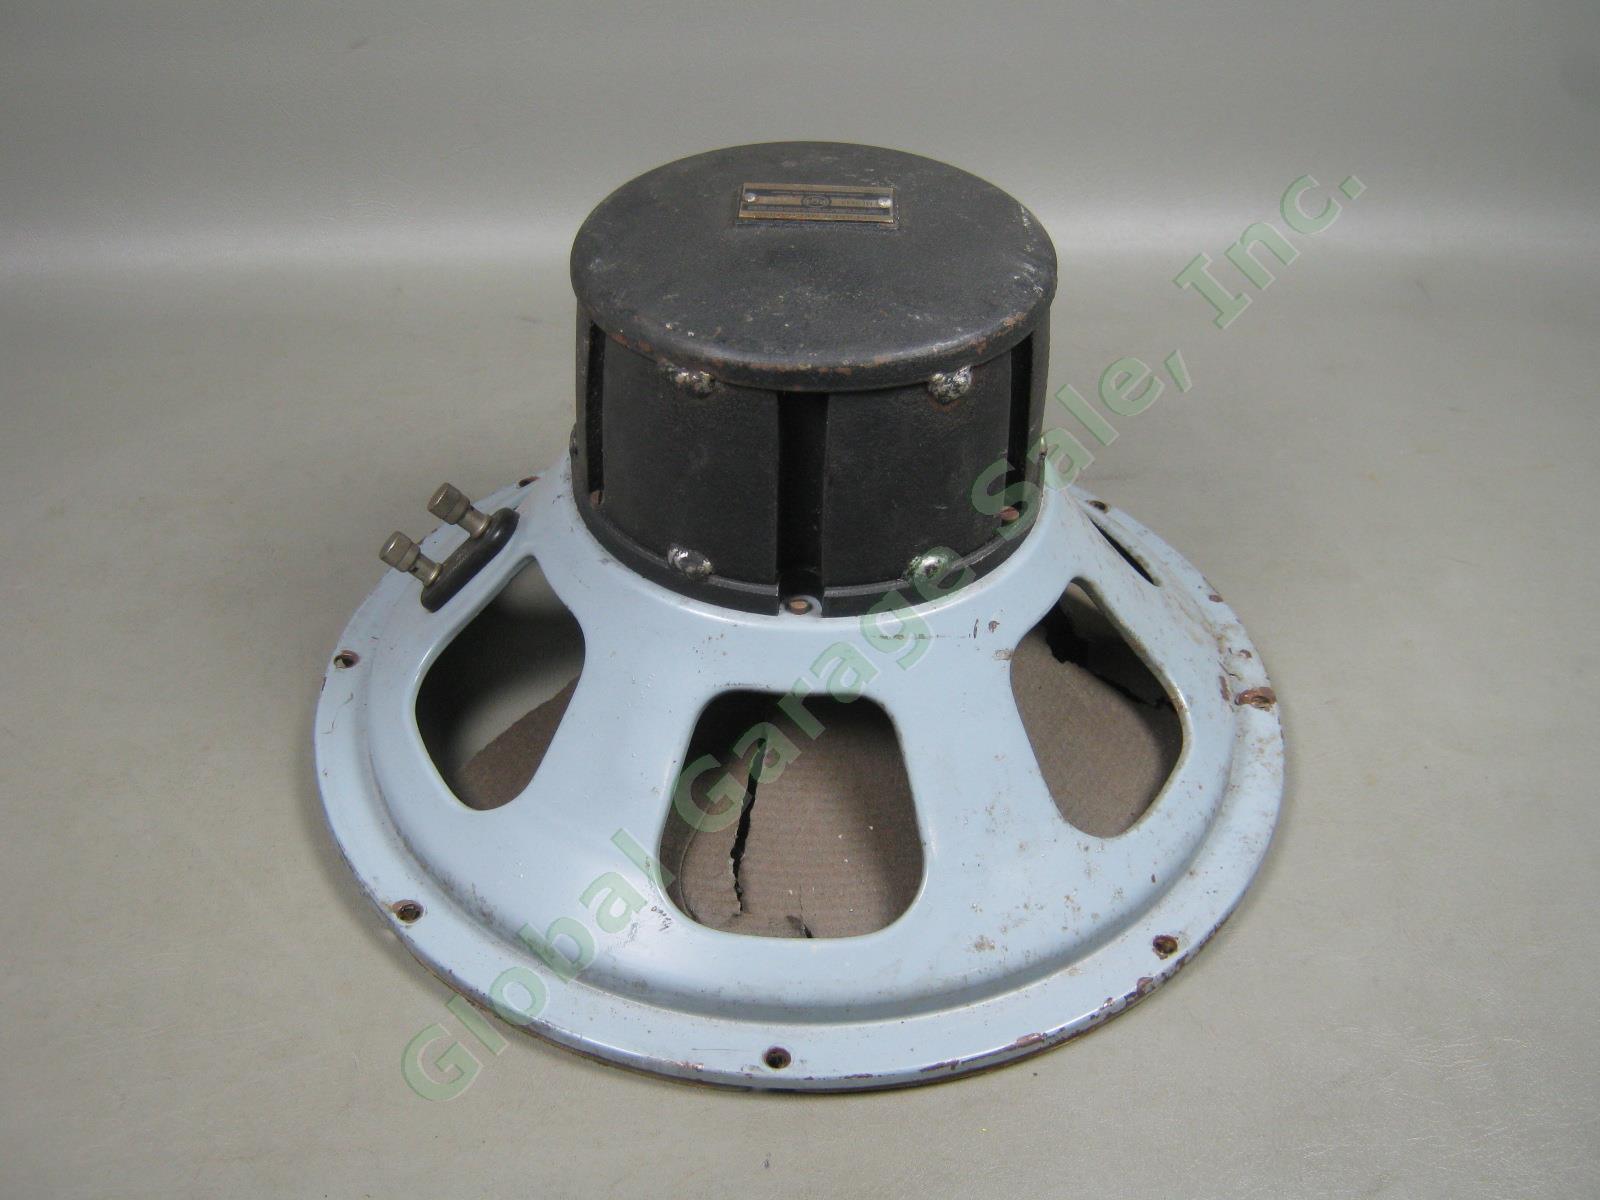 Vtg 15" RCA MI-9449 Theatre Woofer Speaker Bass Horn Driver Serial C2503 Tested 1